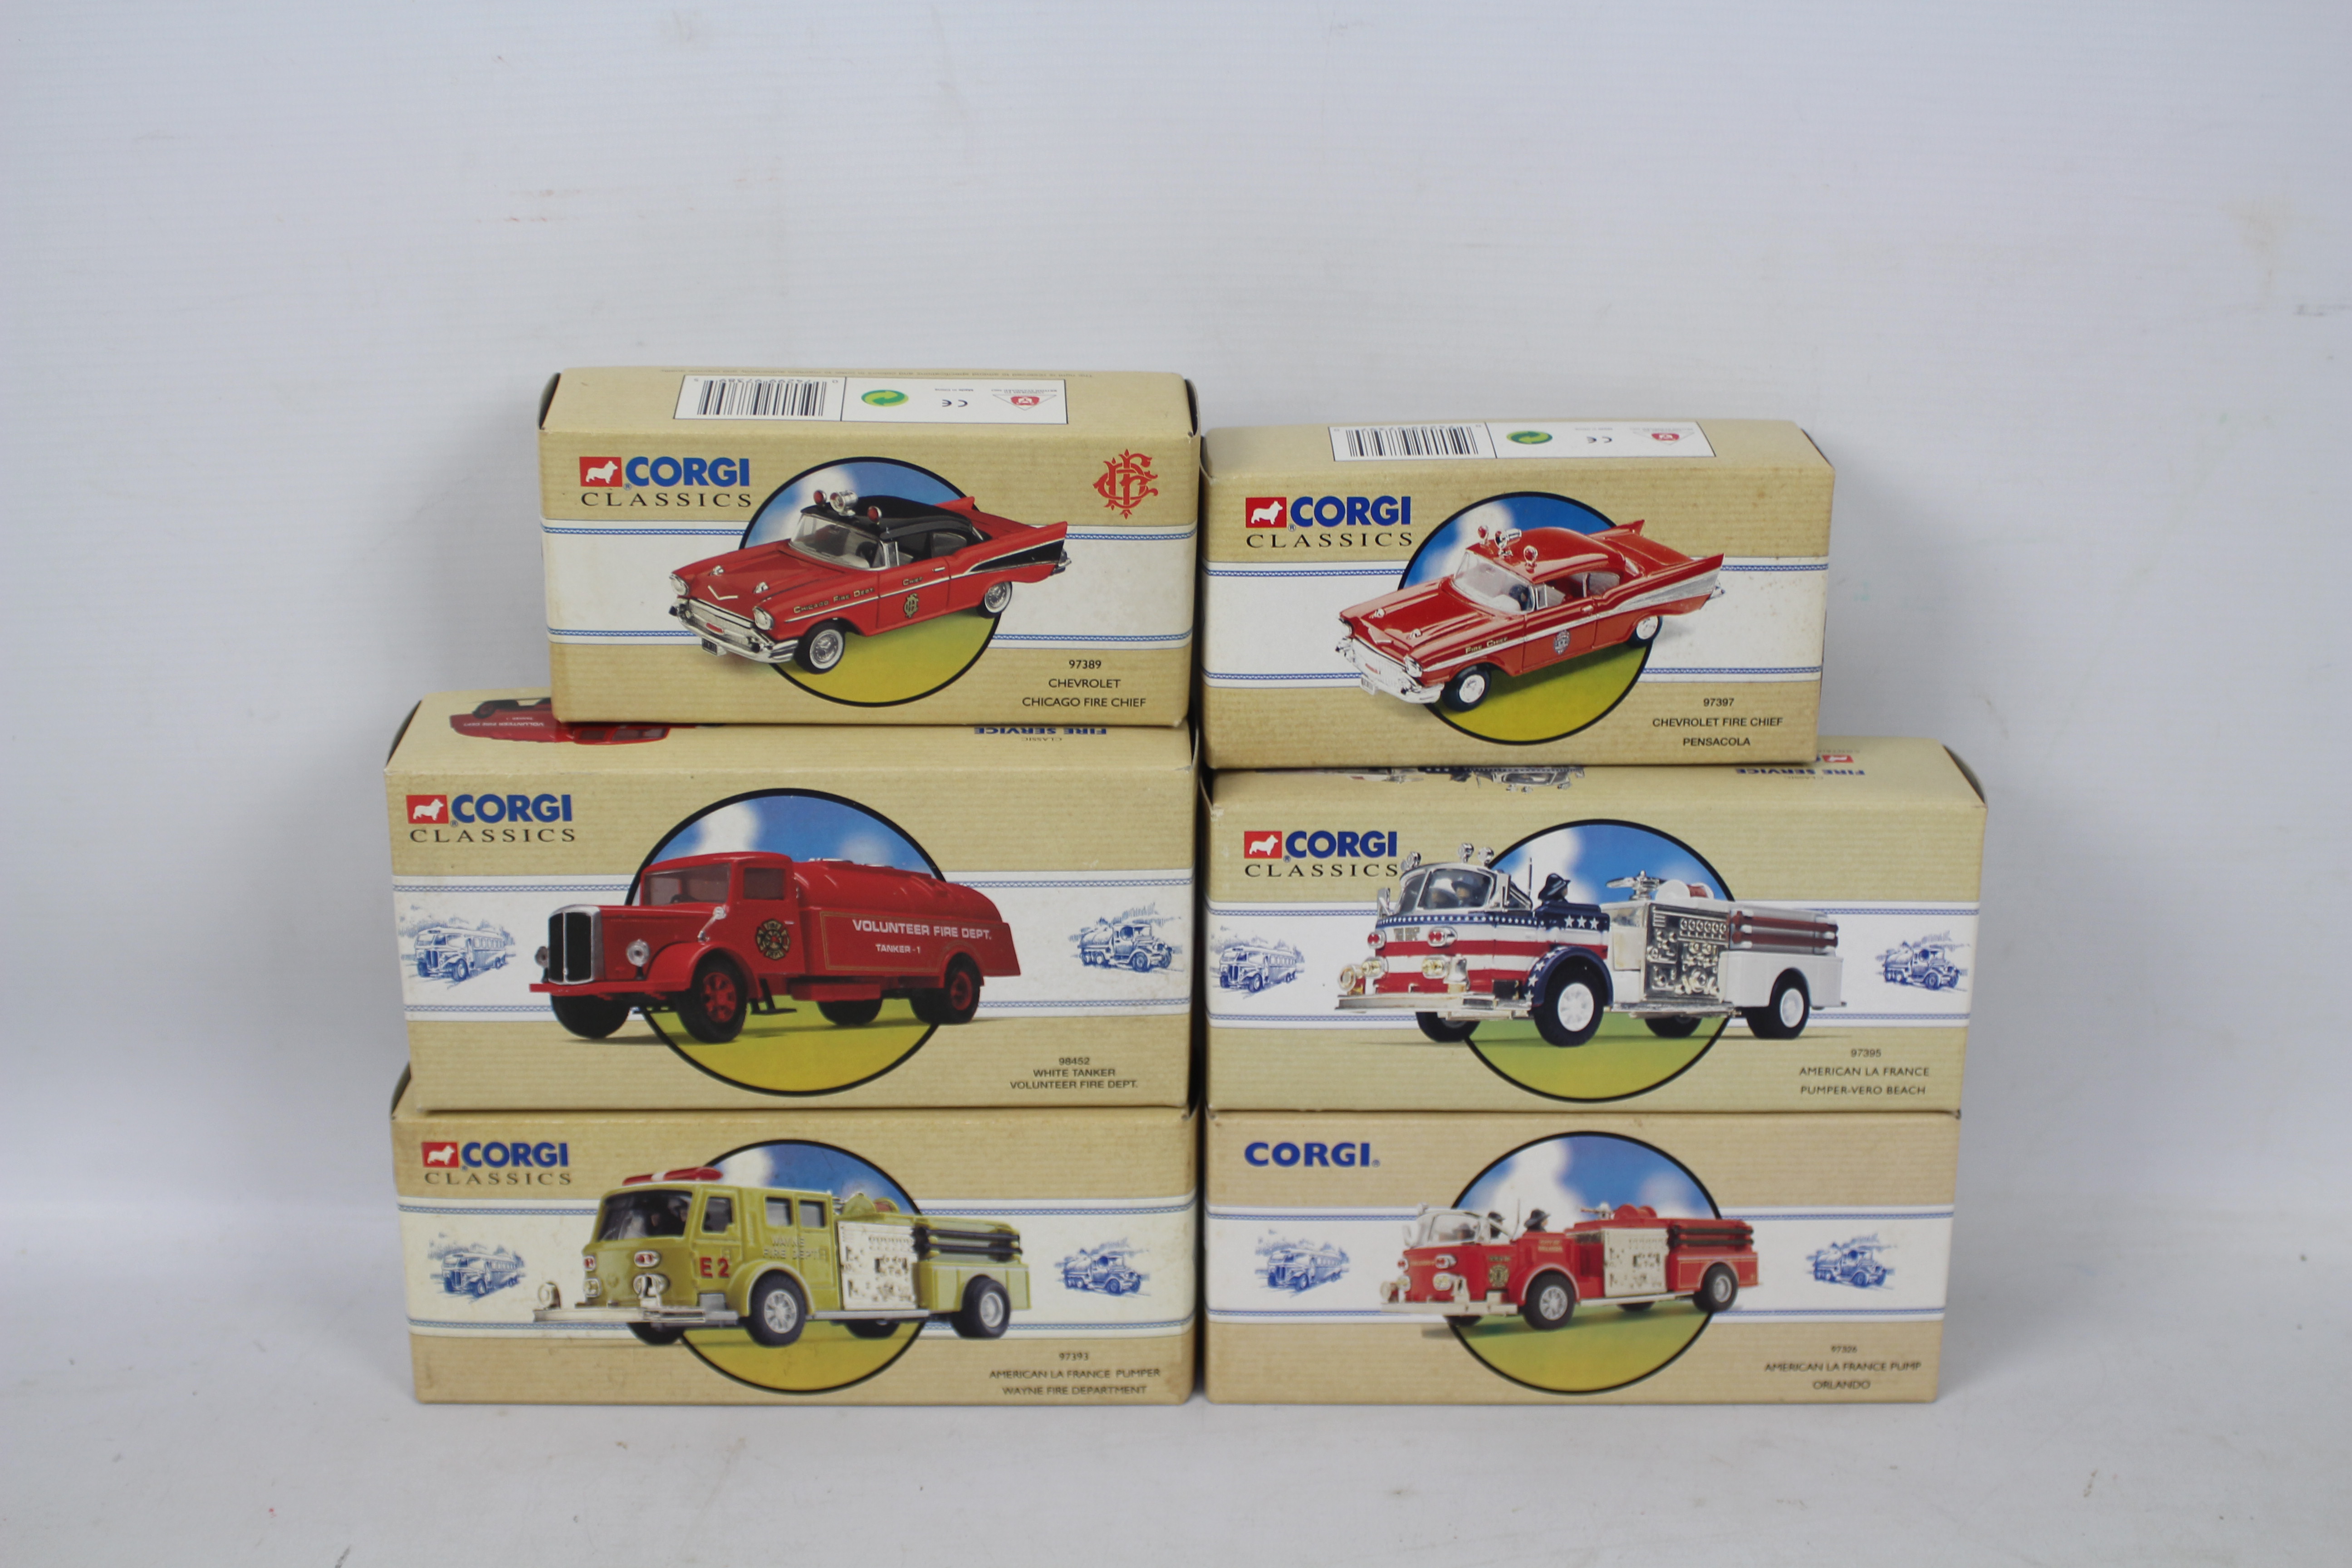 Corgi Classics - Six boxed diecast US Fire Appliances / vehicles from Corgi.